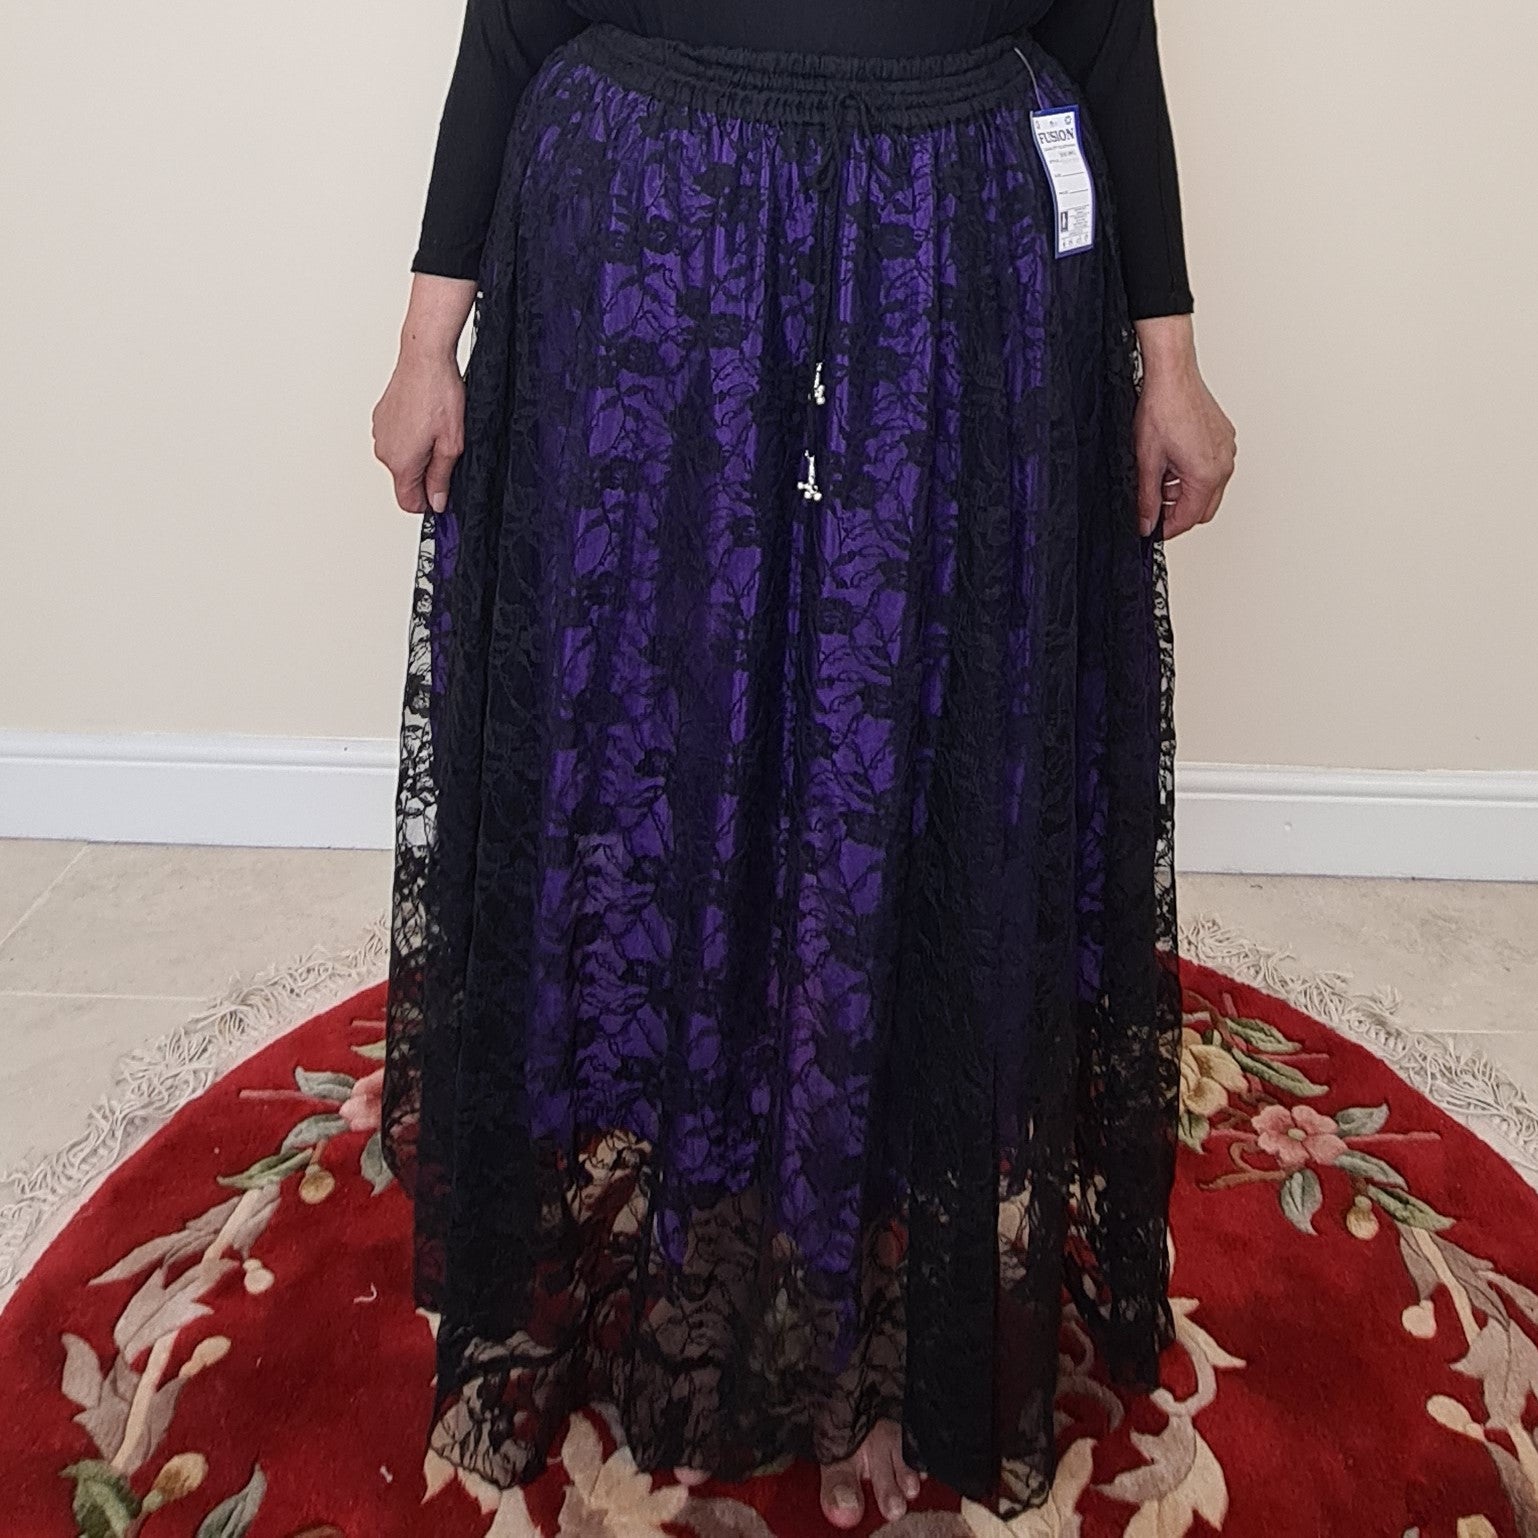 Lace Overlay Maxi Skirt - Purple & Black